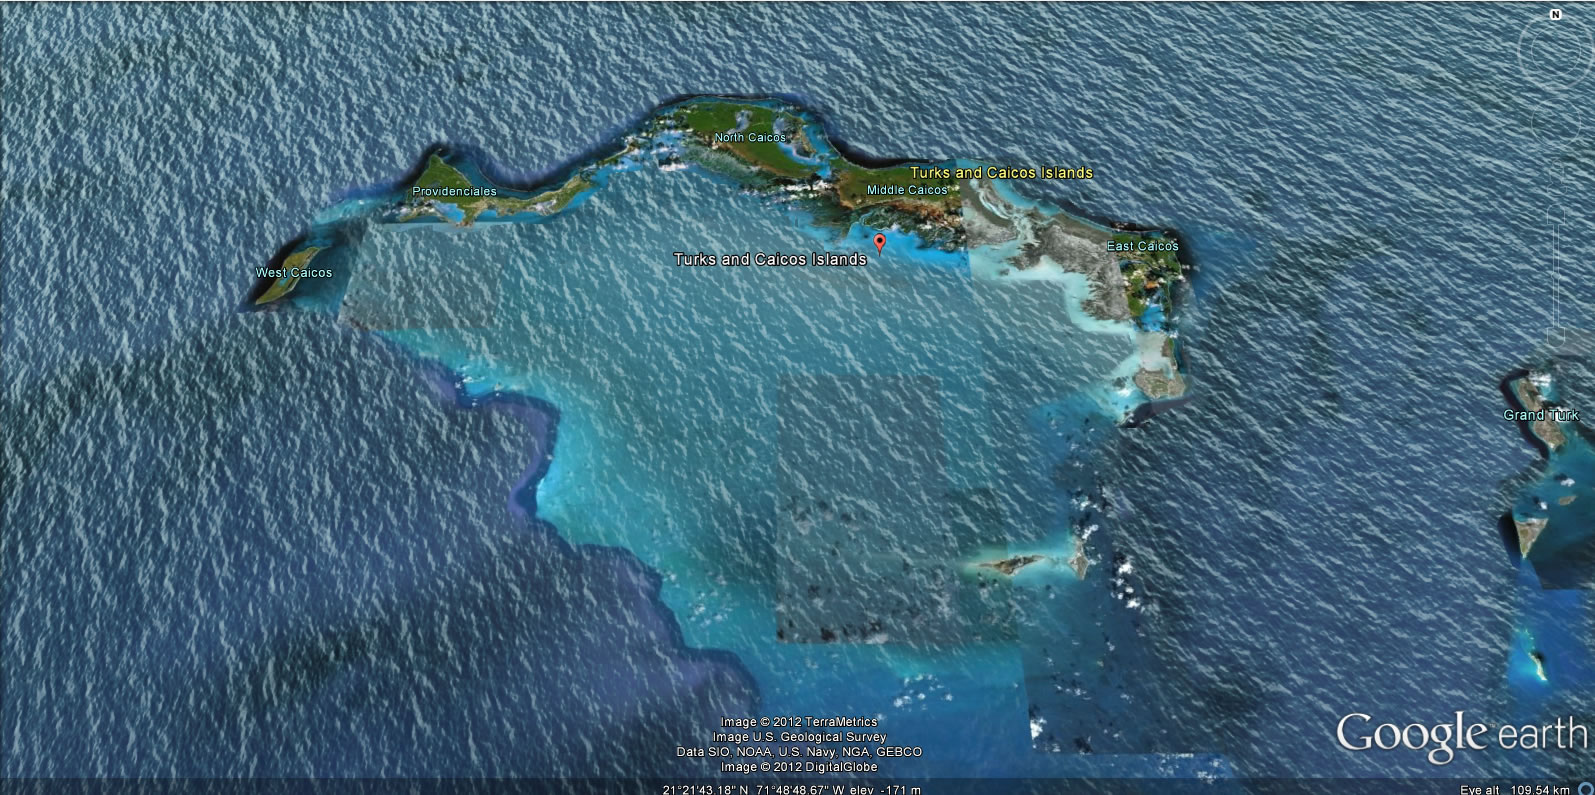 Turks and Caicos adalari yeryuzu haritasi